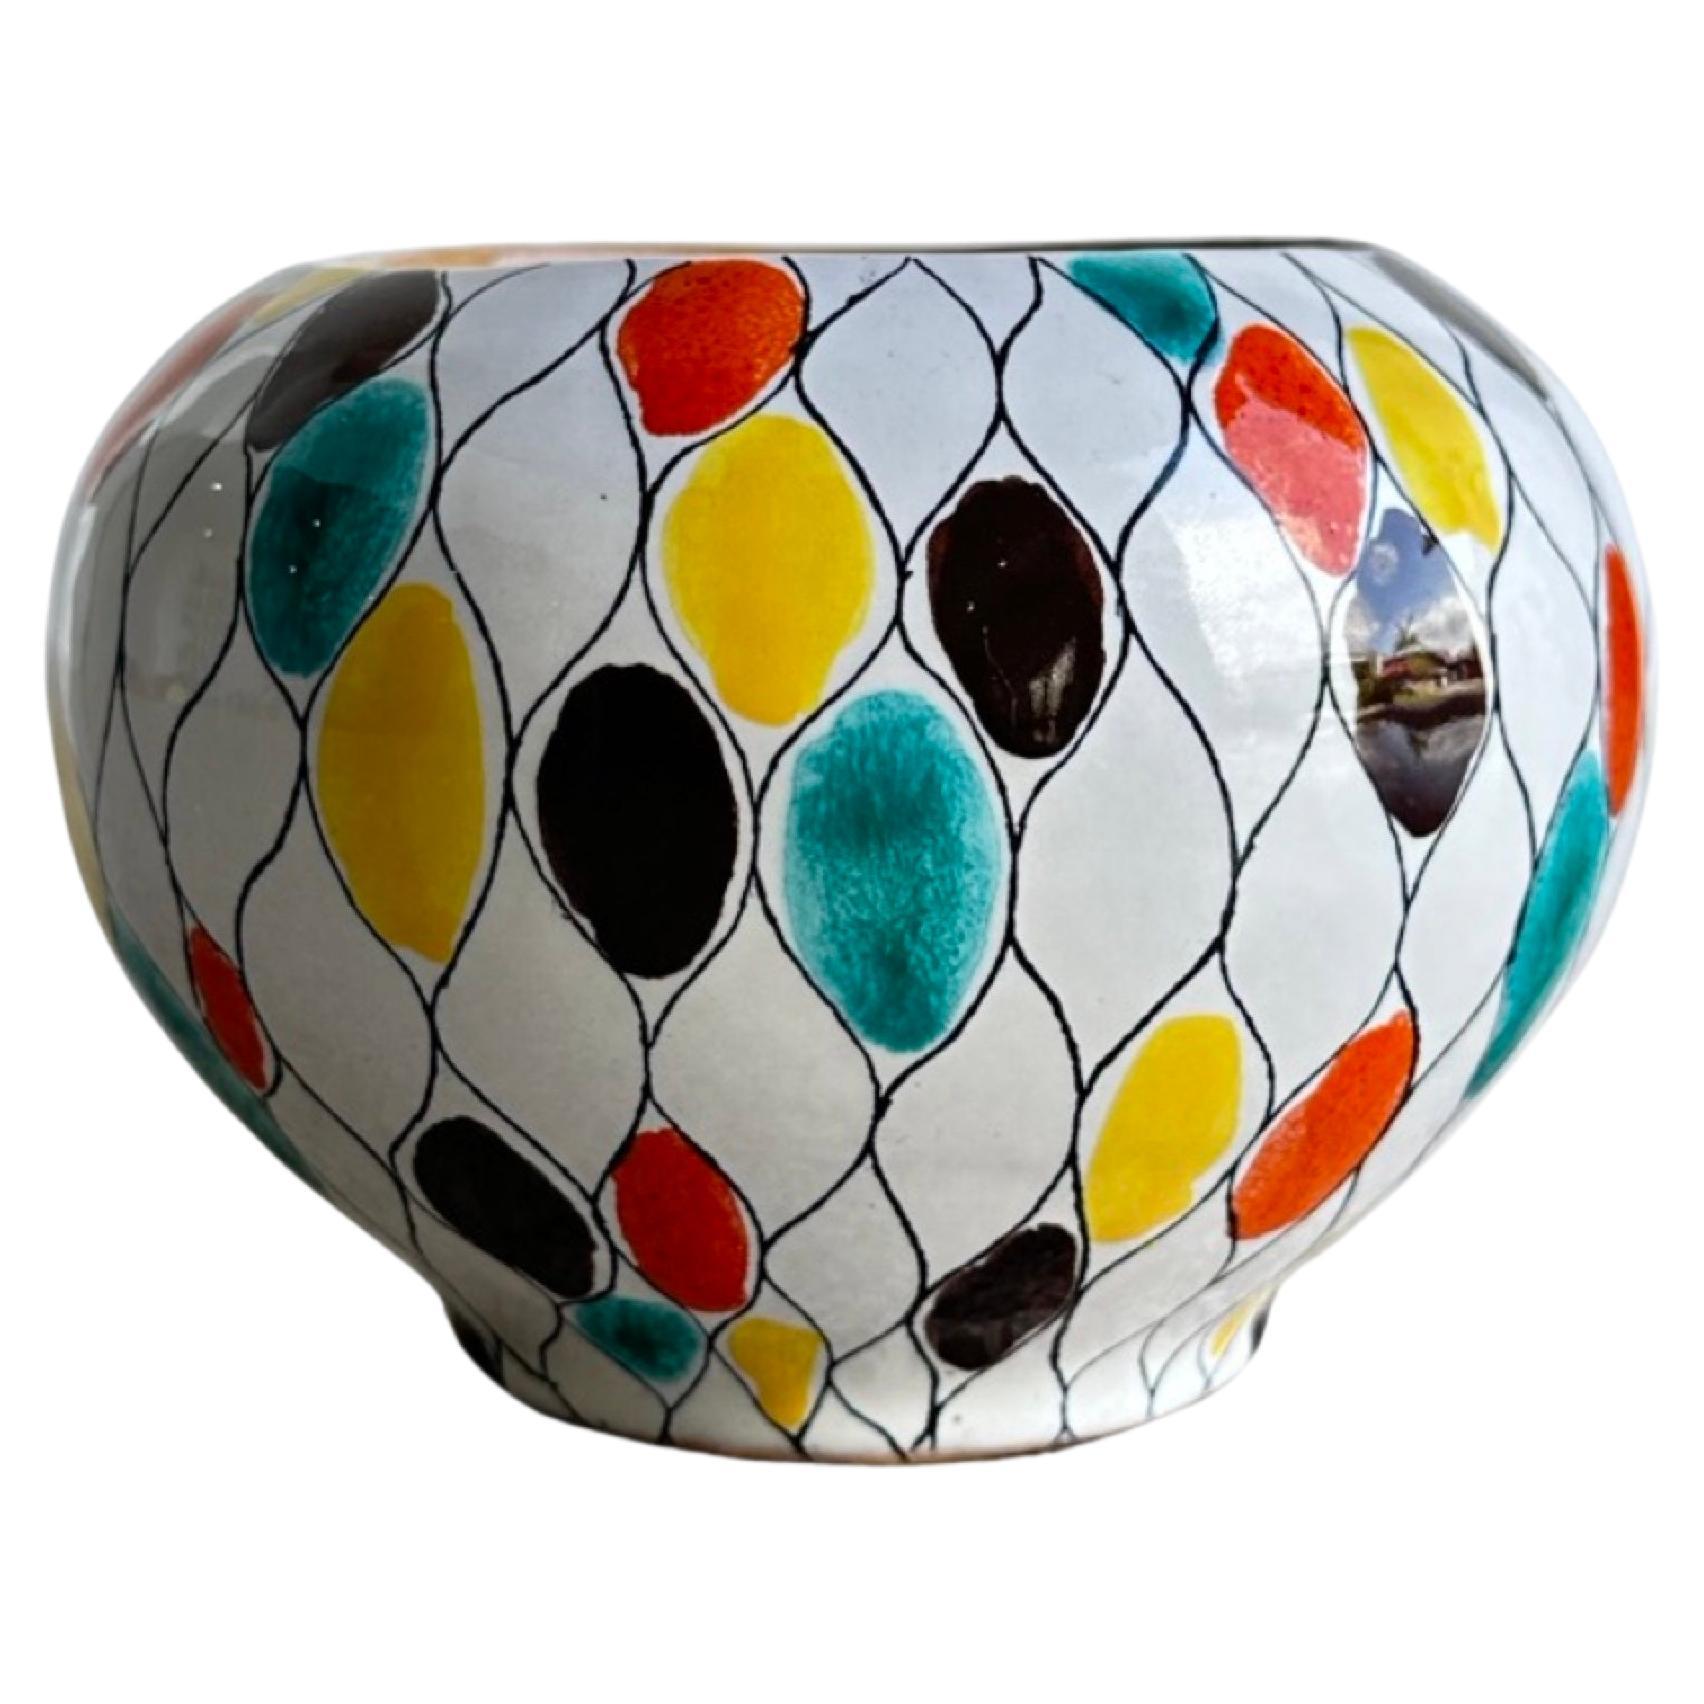 Italian Circular Glazed Ceramic by Rometti, 1978